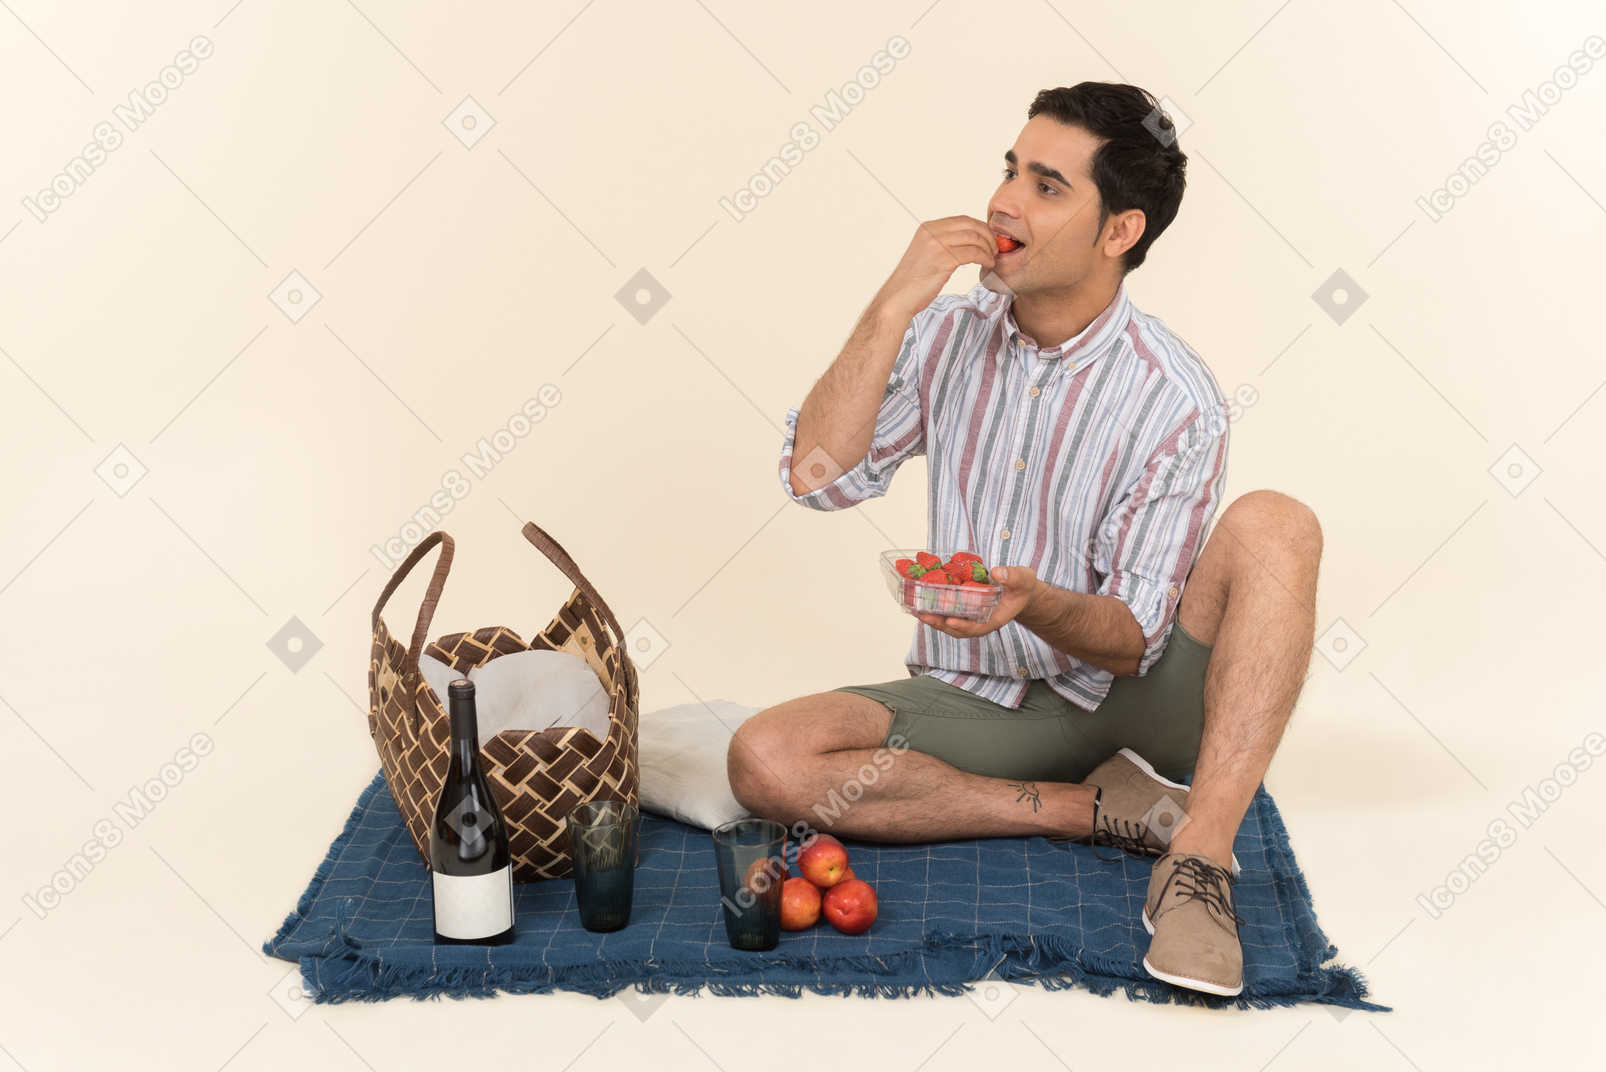 Young caucasian man eating strawberries